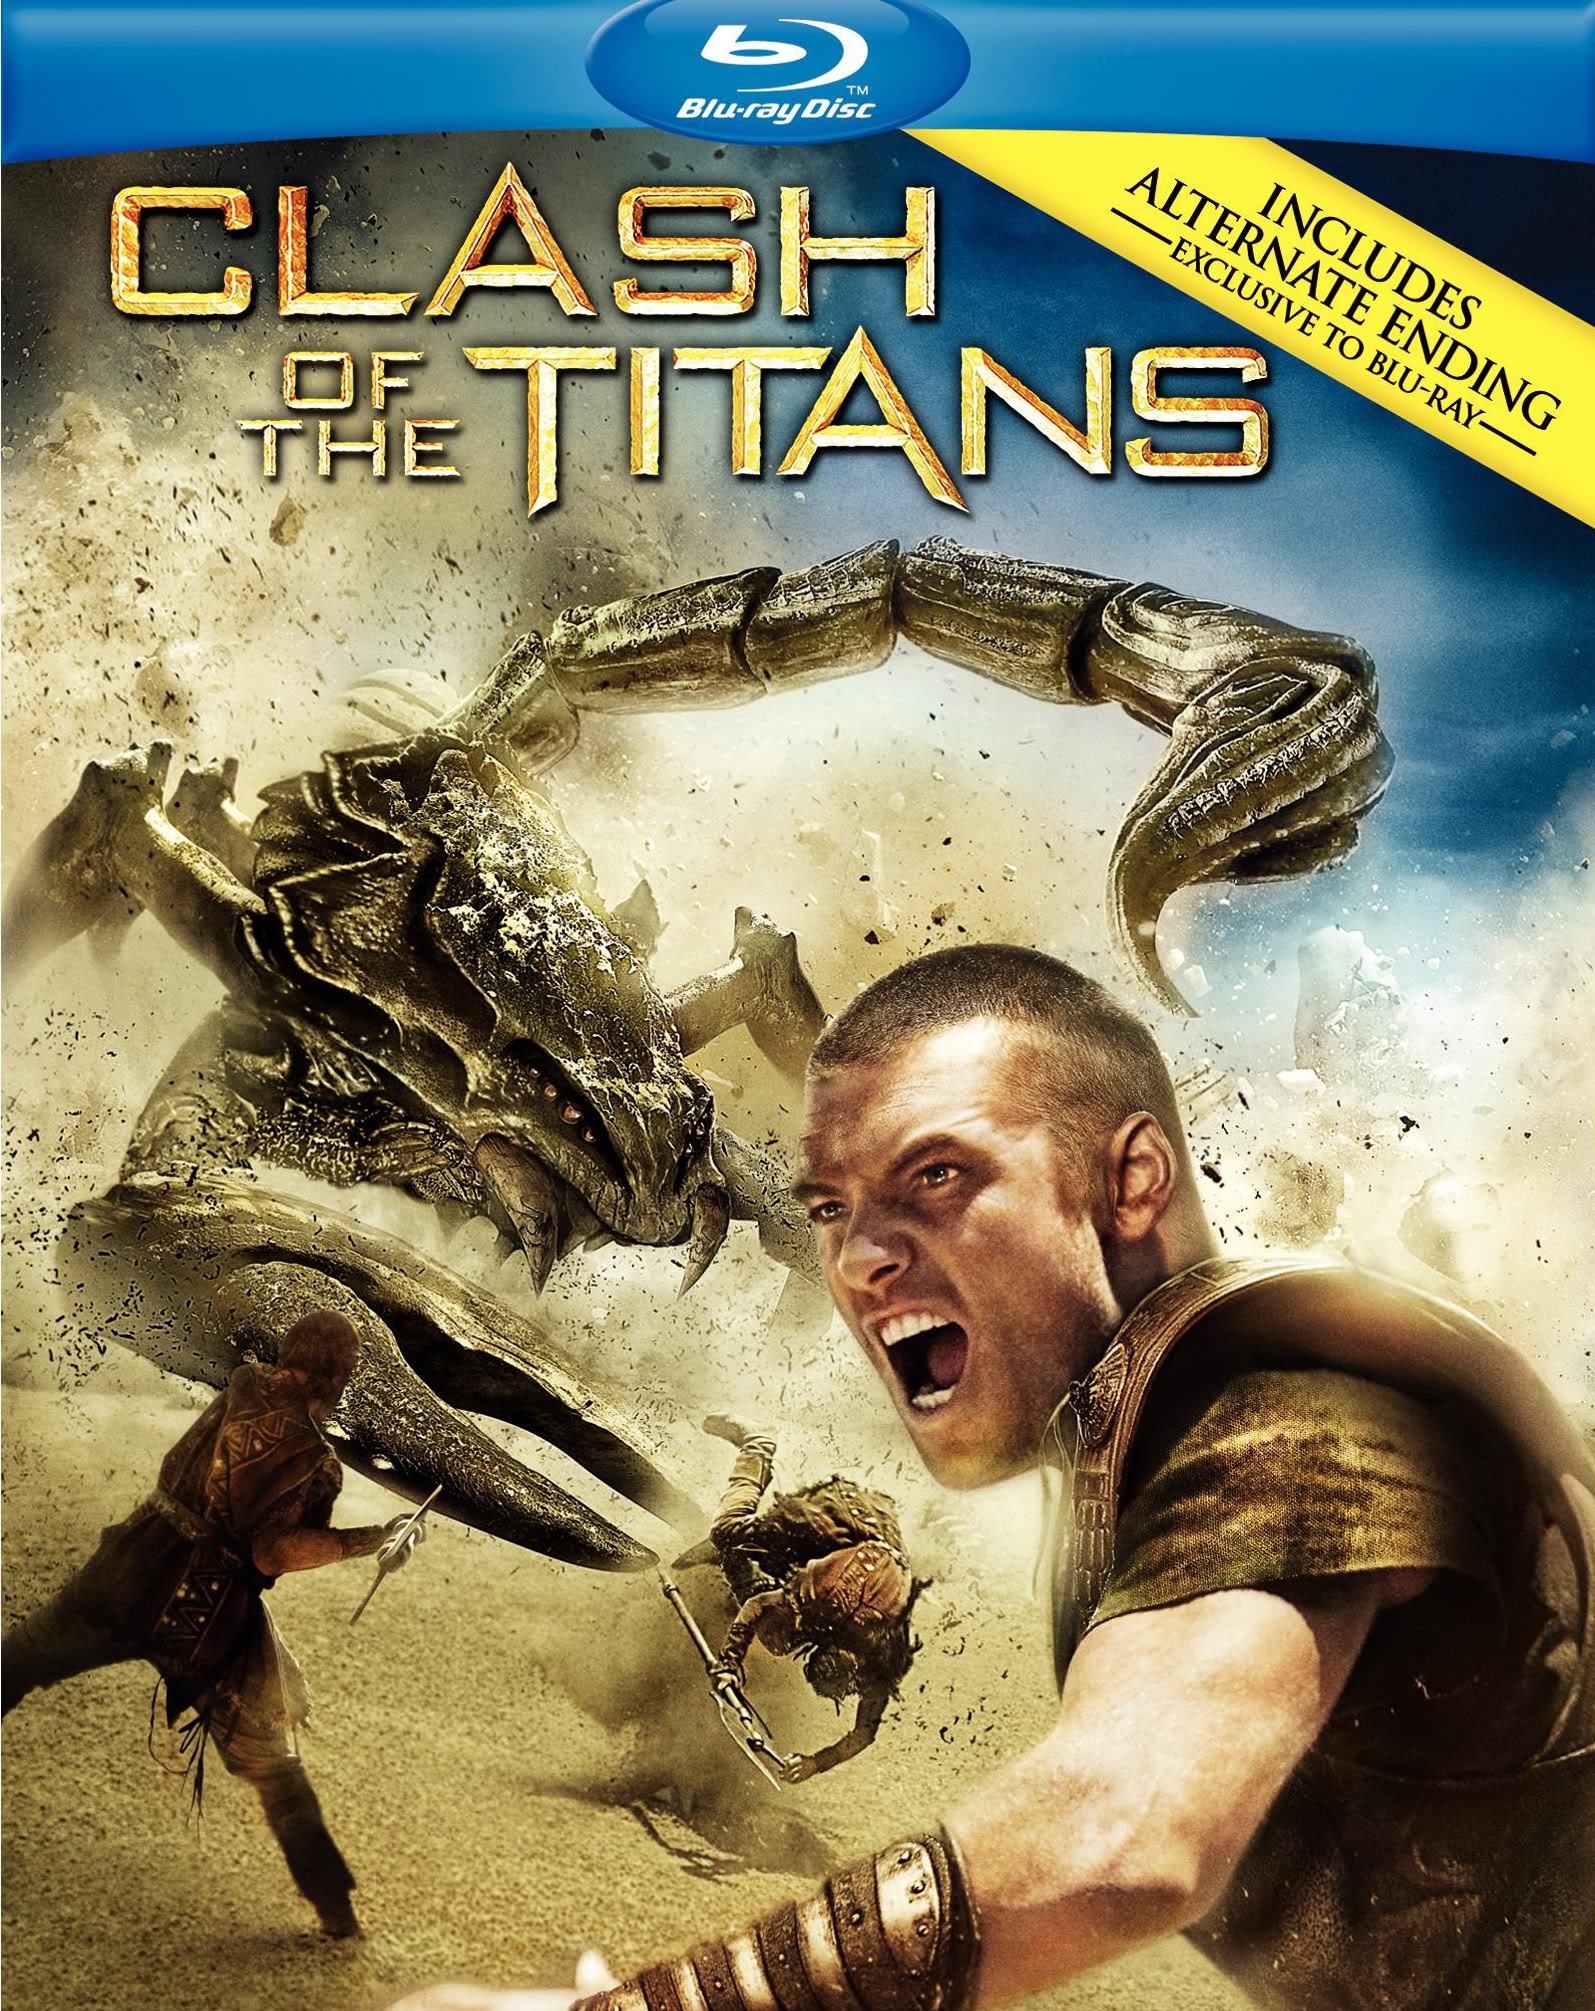 Clash Of The Titans (2010) Backgrounds, Compatible - PC, Mobile, Gadgets| 1595x2011 px